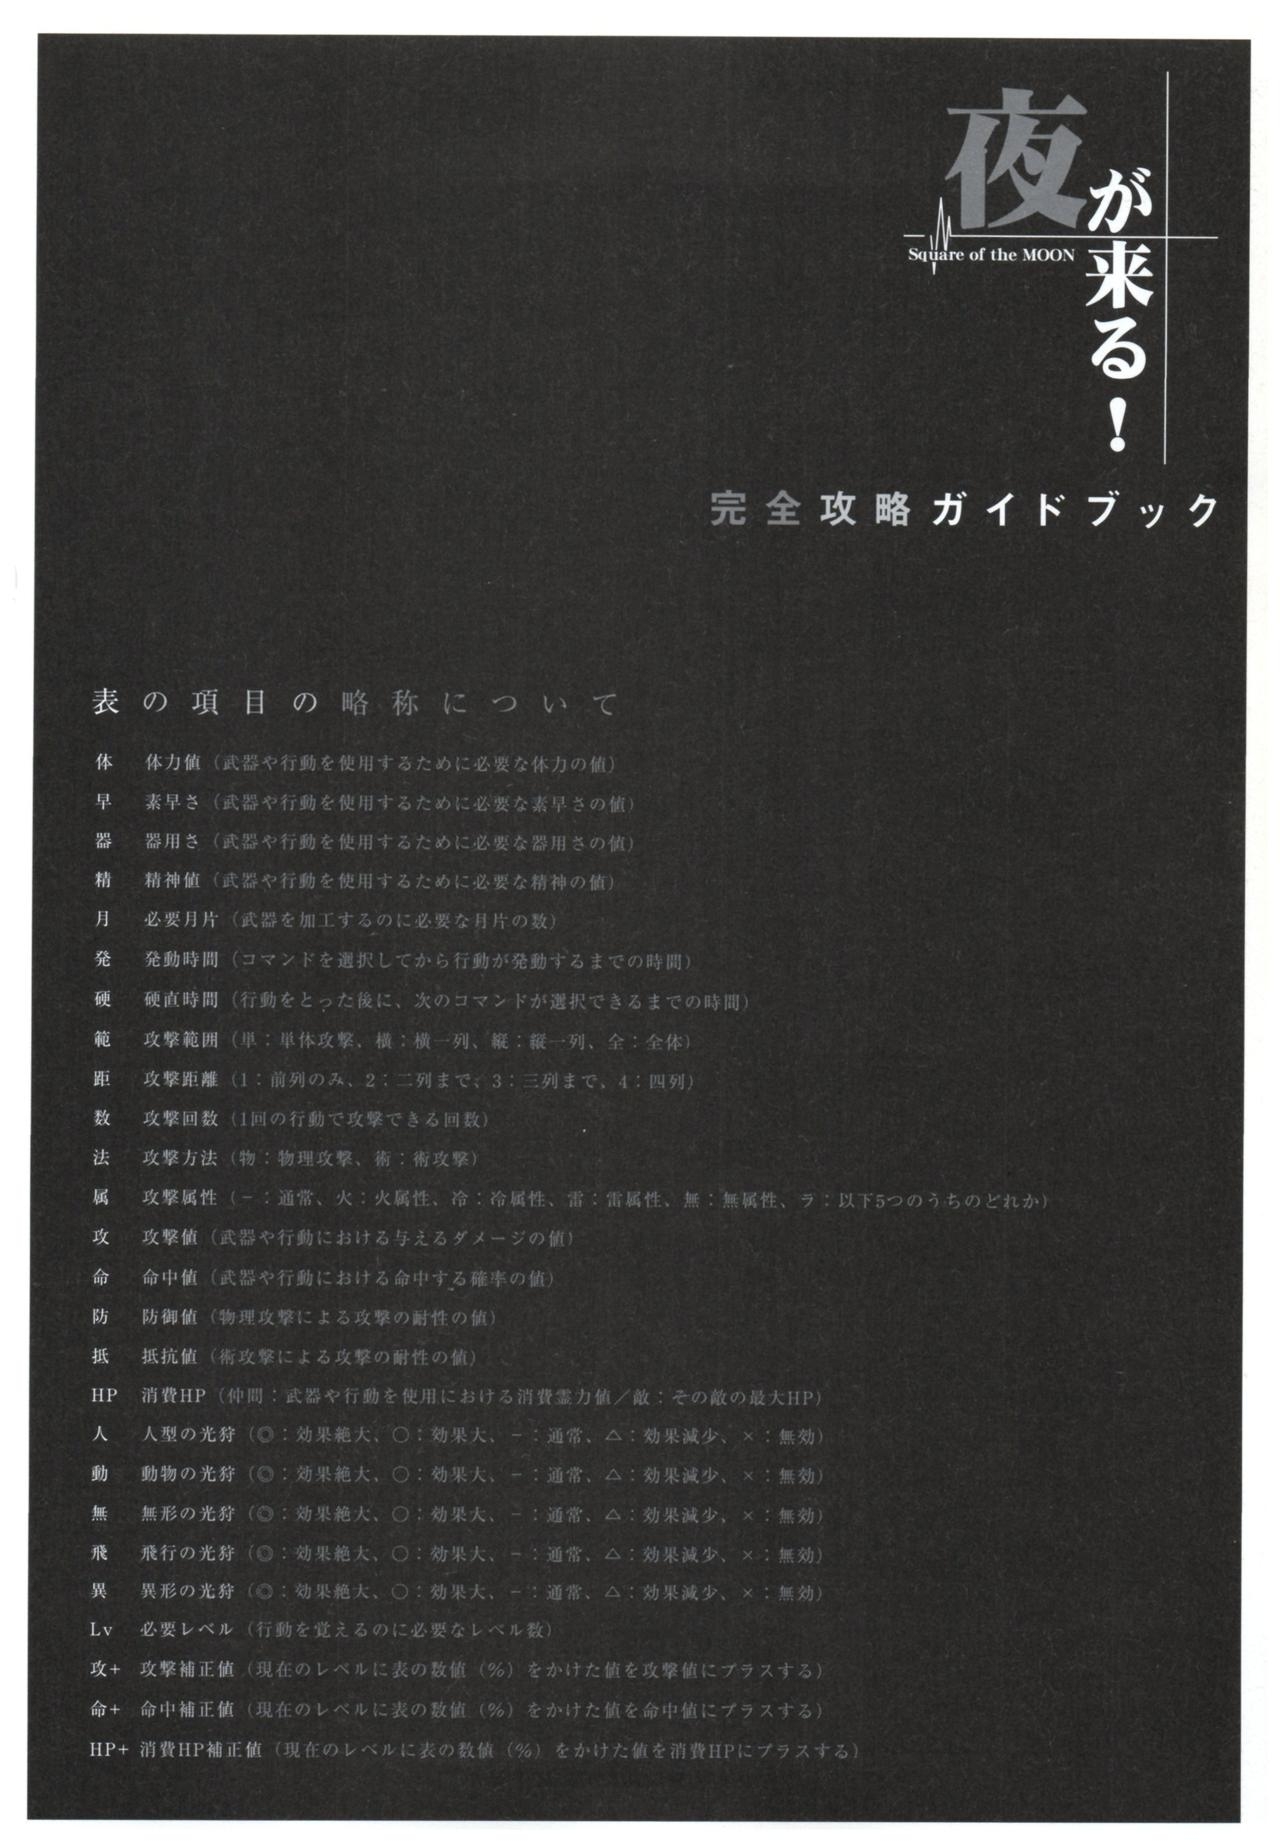 Yoru Ga Kuru! Square Of The Moon Visual Fan Book 86